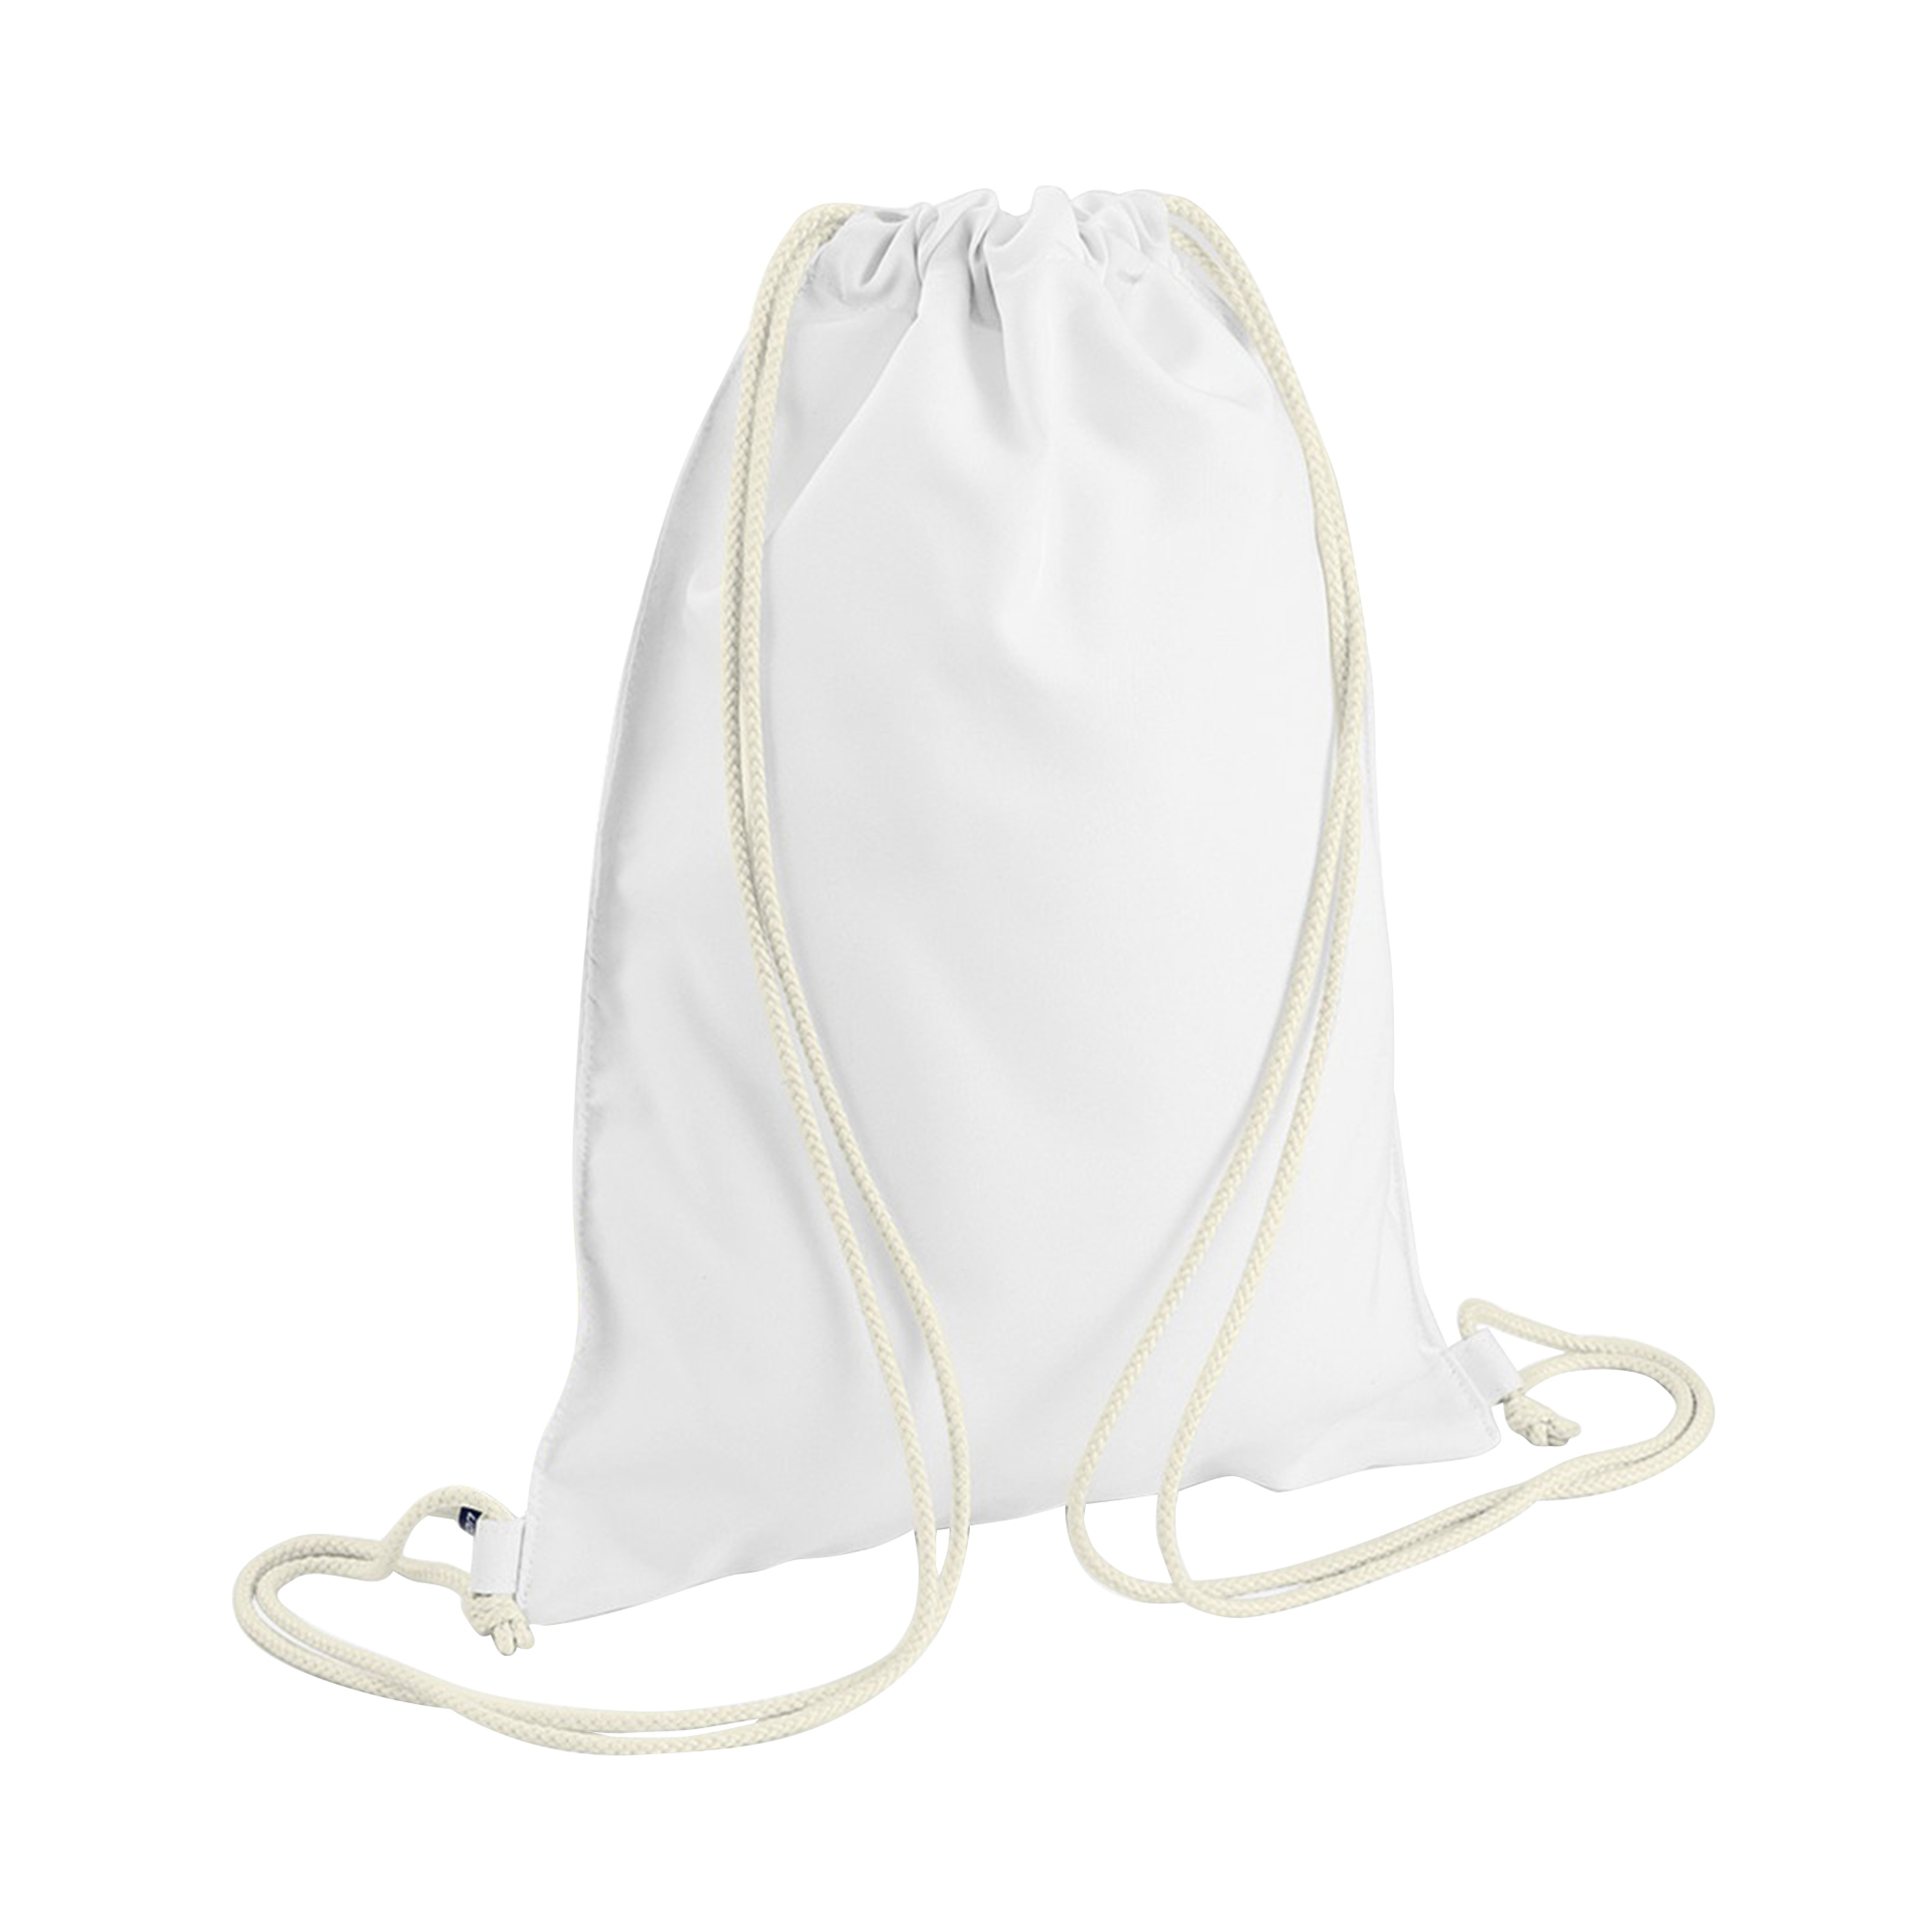 Mochila Saco O De Cuerdas Modelo Sublimation Deporte/gimnasio (5 Litros) Bagbase (Blanco)